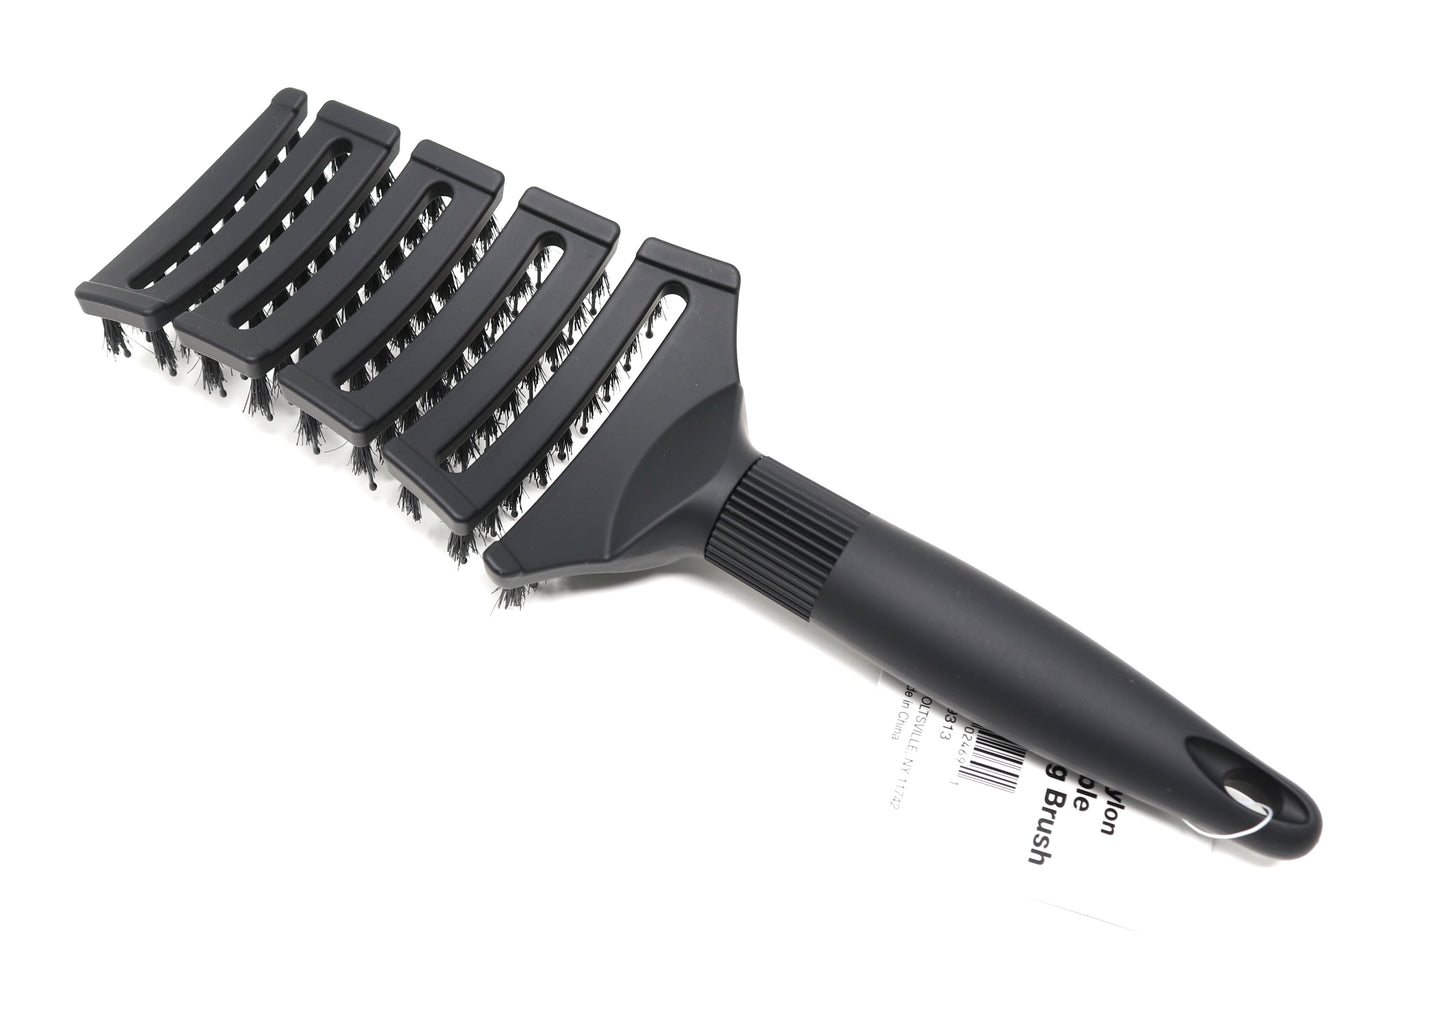 Scalpmaster Boar Nylon Flexible Detangling Hair Brush Shines Drys Straightening Brush 1 Pc.